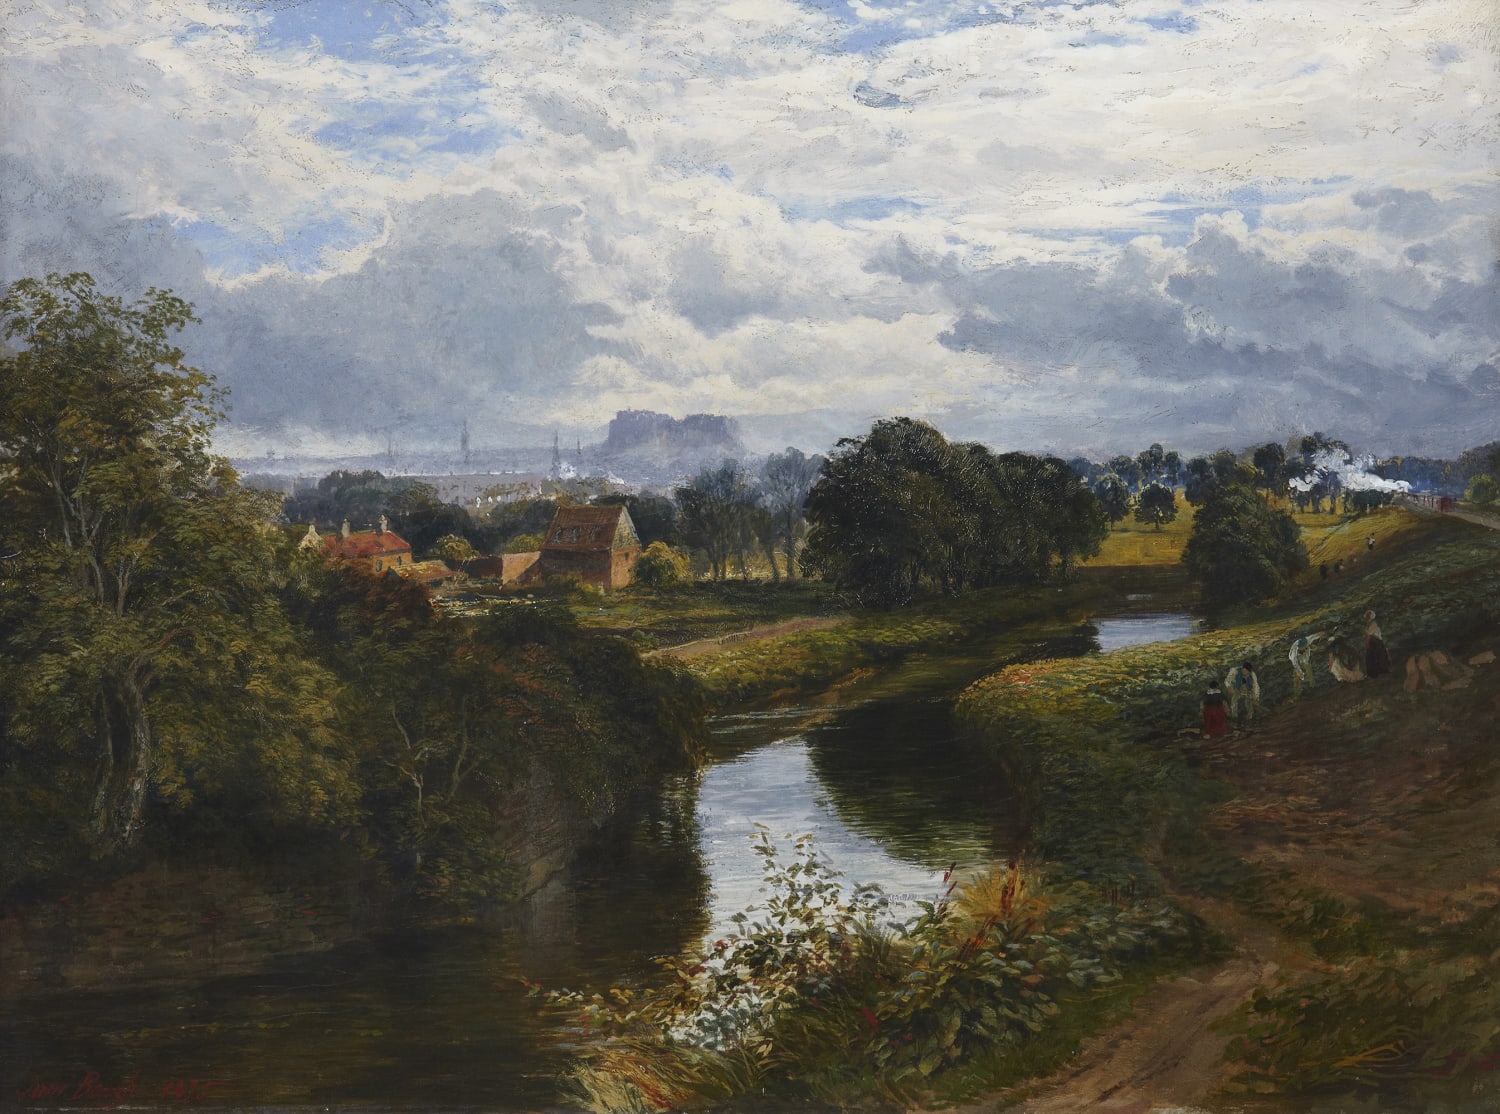 Samuel Bough RSA (1822-78) View of Edinburgh from Bonnington  Oil on canvas, 1875, 45.8 x 61.1cm  RSA Diploma Collection (Deposited, 1875) 2000.028